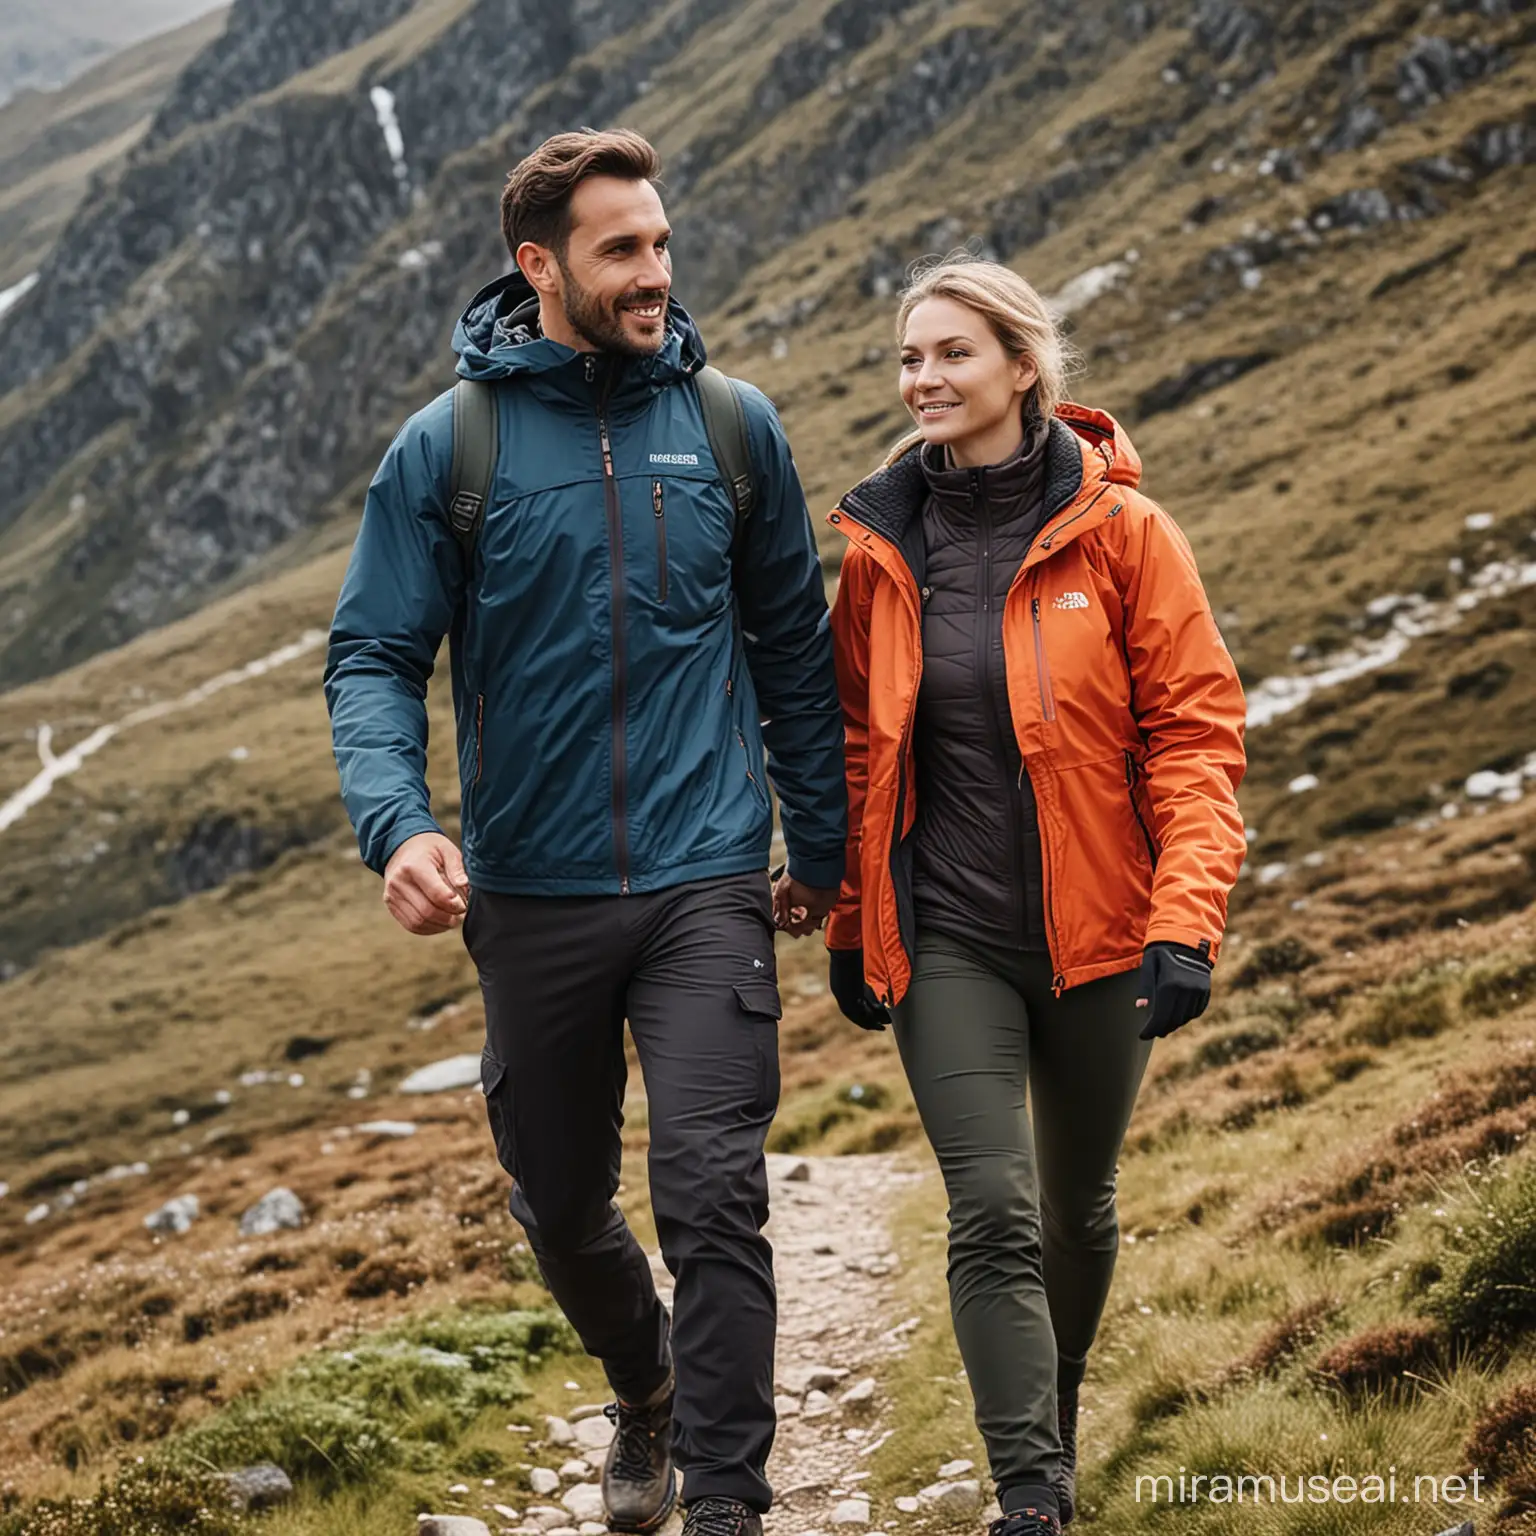 Adventurous Couple Exploring Nature in Stylish Jackets